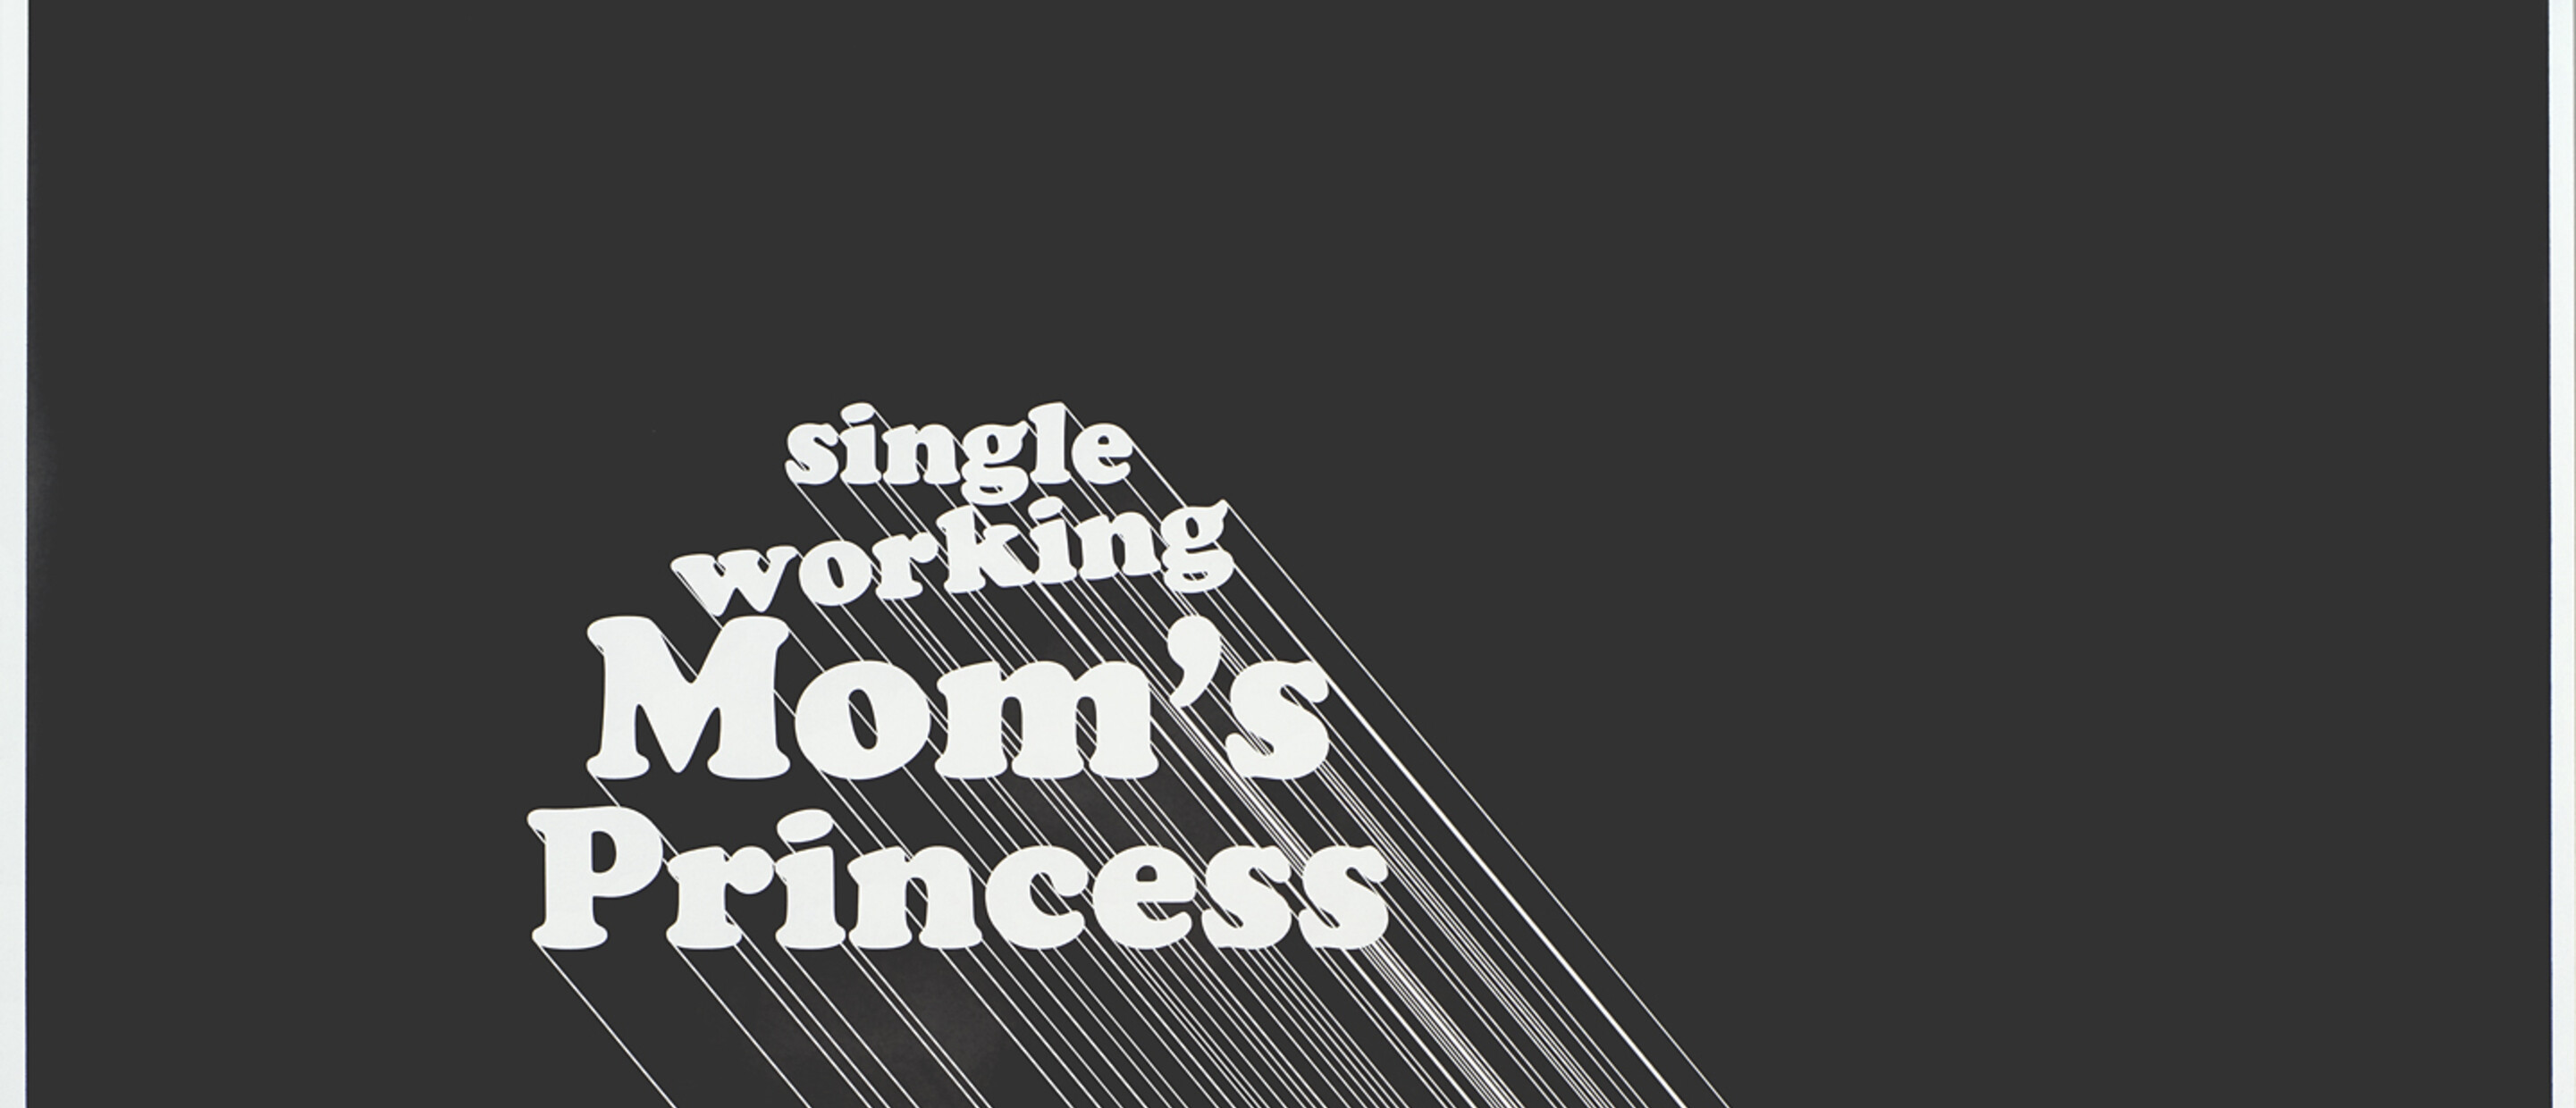 Text drawing saying 'single working Mom's Princess'